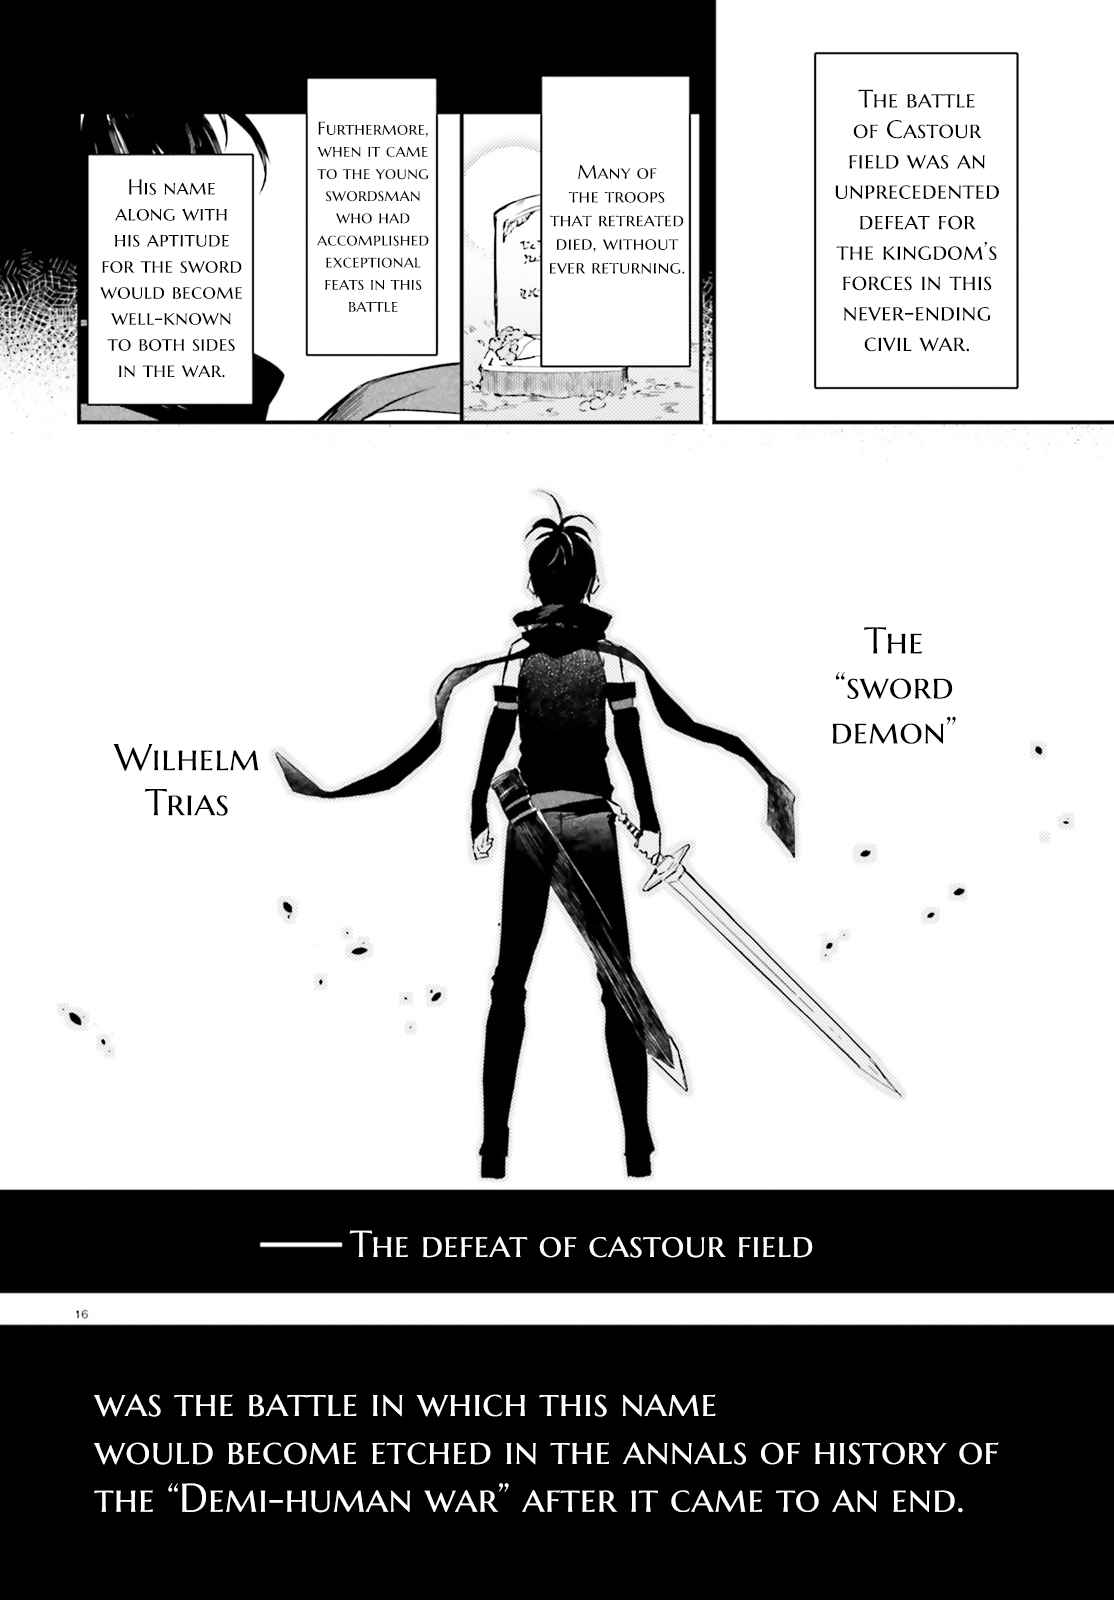 Re: Zero Kara Hajimeru Isekai Seikatsu Kenki Koiuta Vol. 1 Ch. 0 The "Demon" That Descended onto the Battlefield